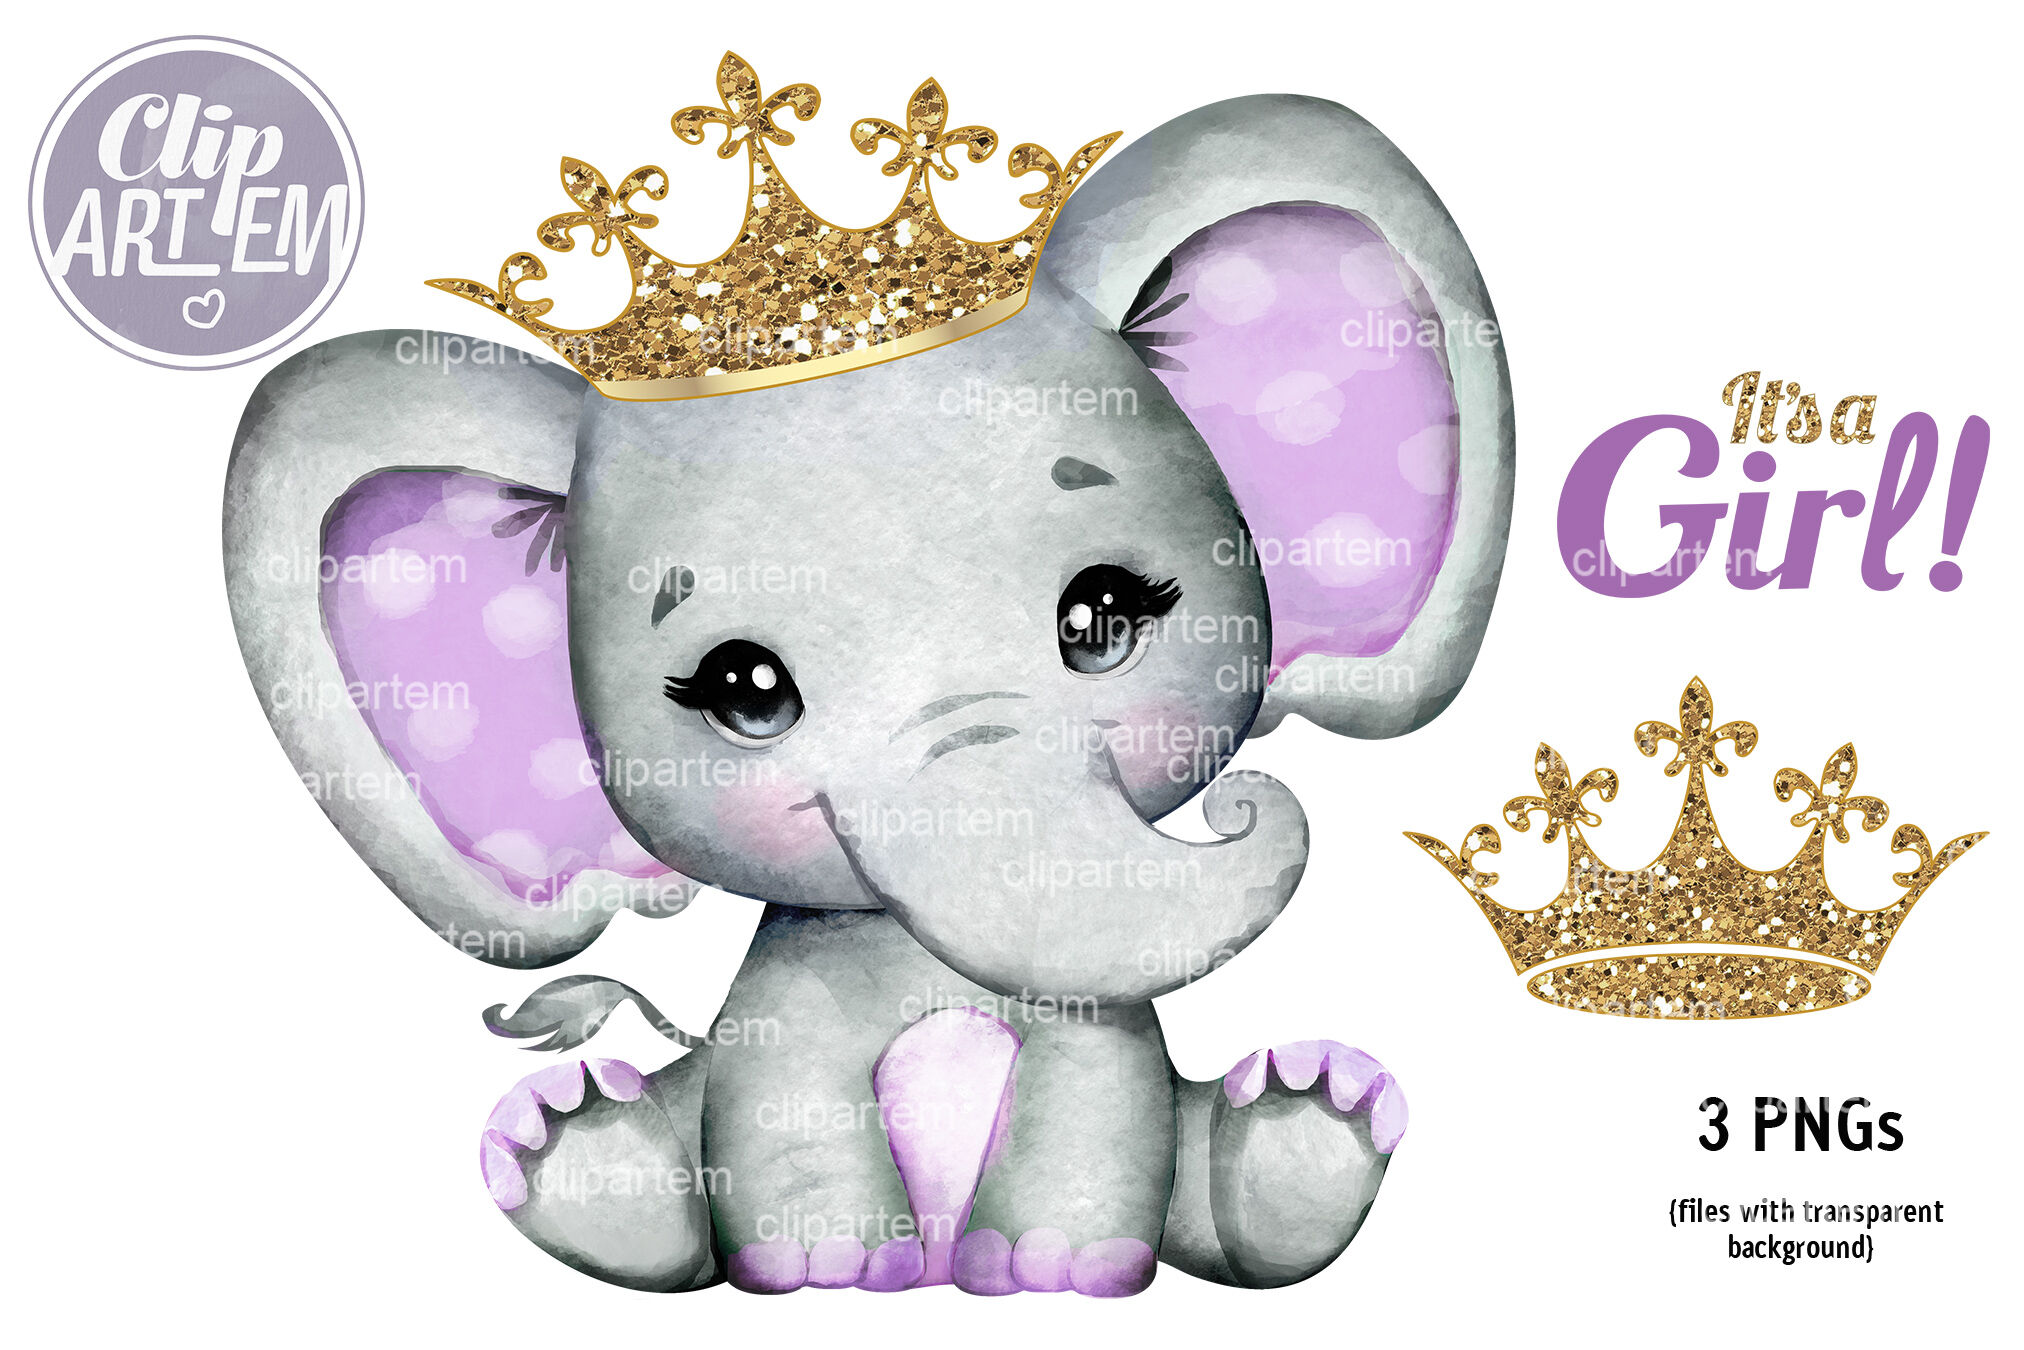 purple tiara clip art